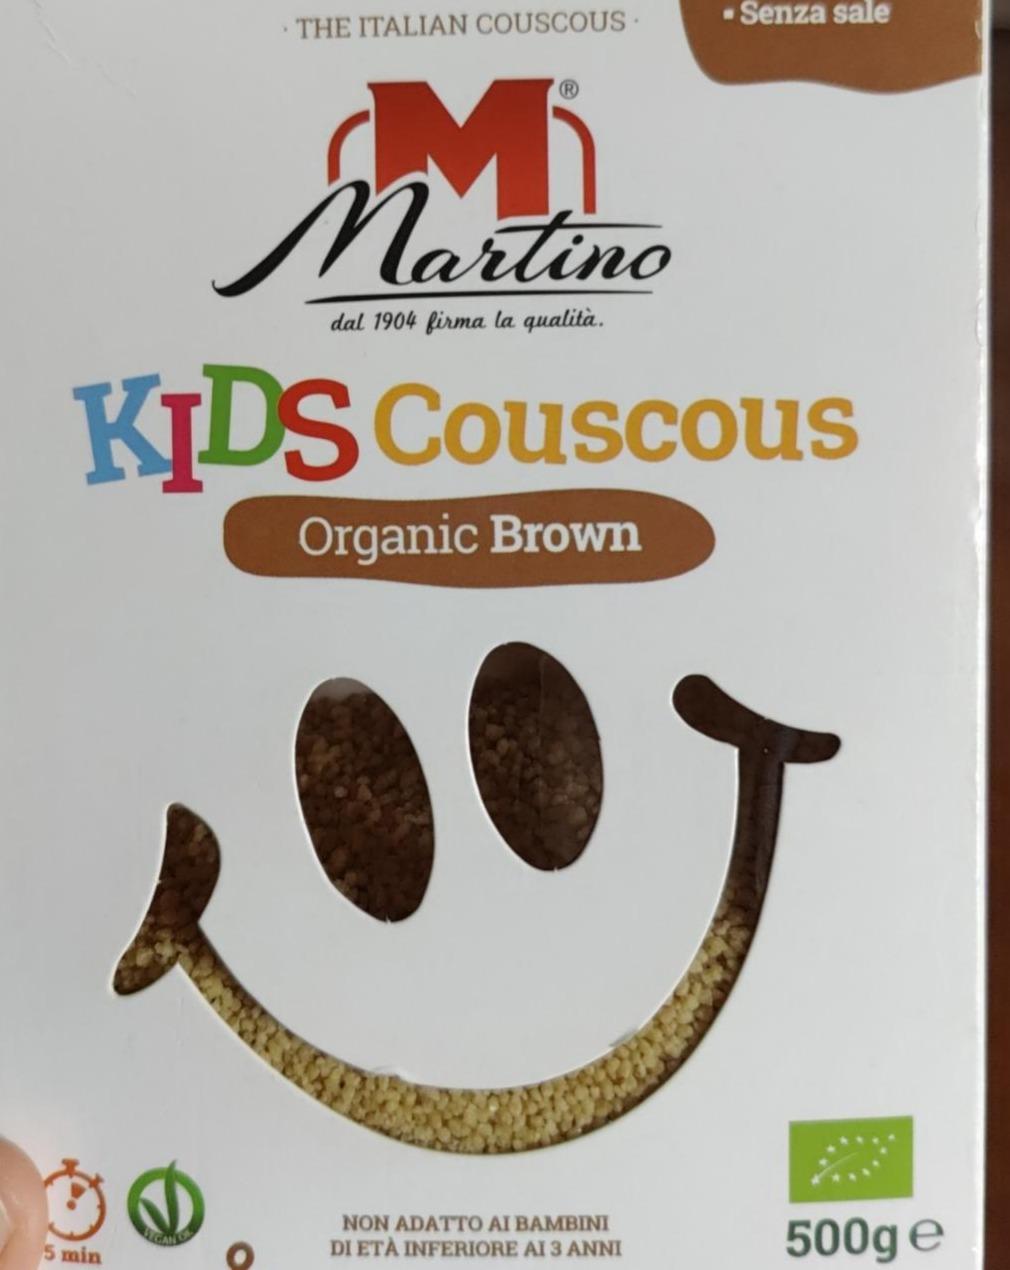 Фото - Кус-кус Kids couscous organic brown Martino